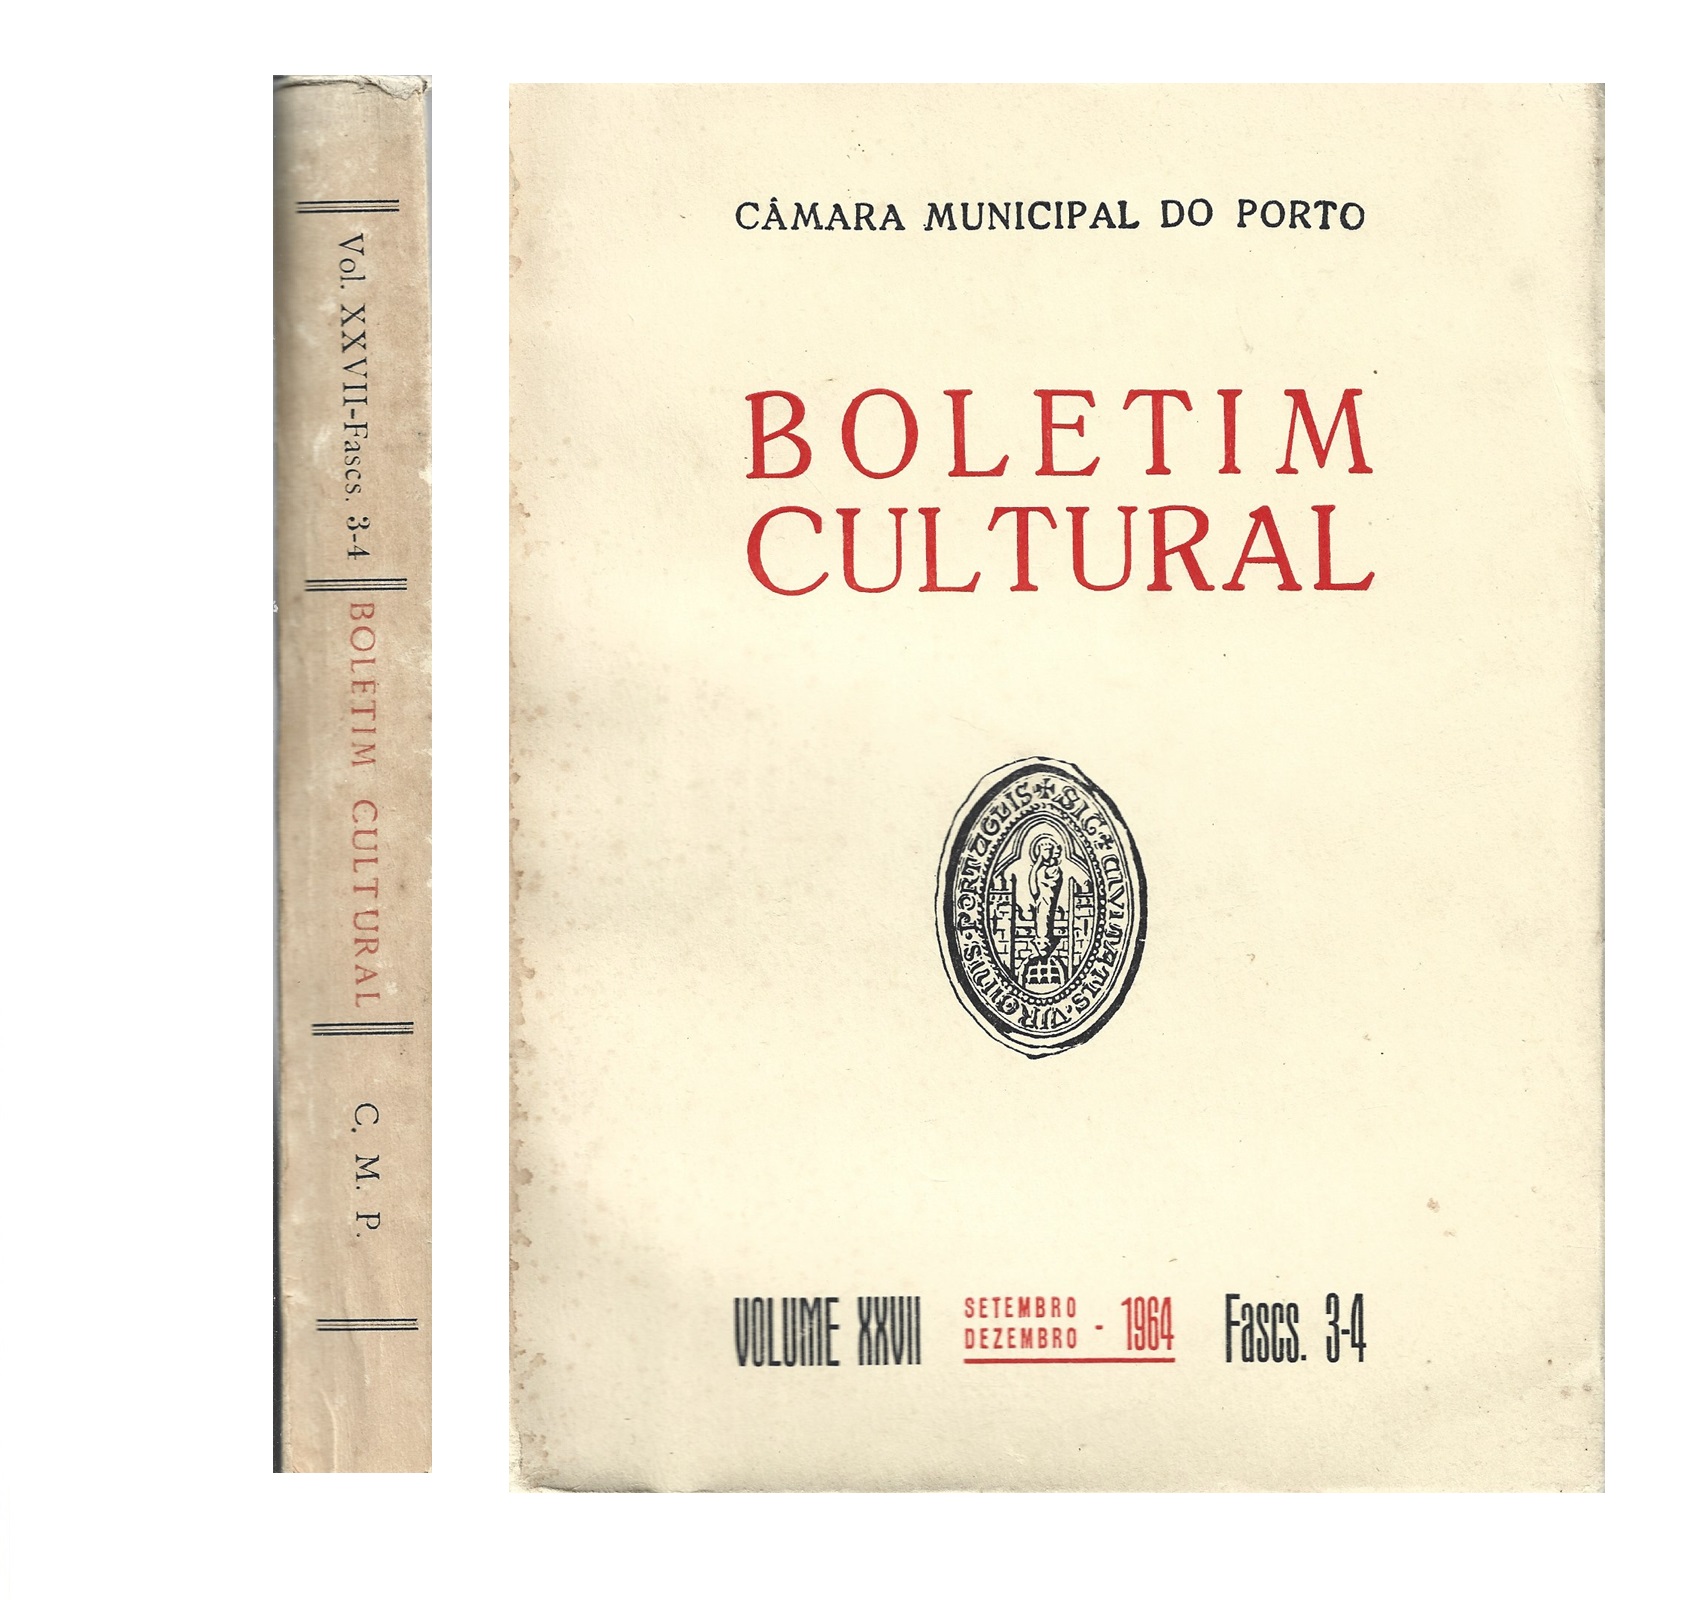 B. C. PORTO VOLUME XXVII, 1964. FASCS. 3-4